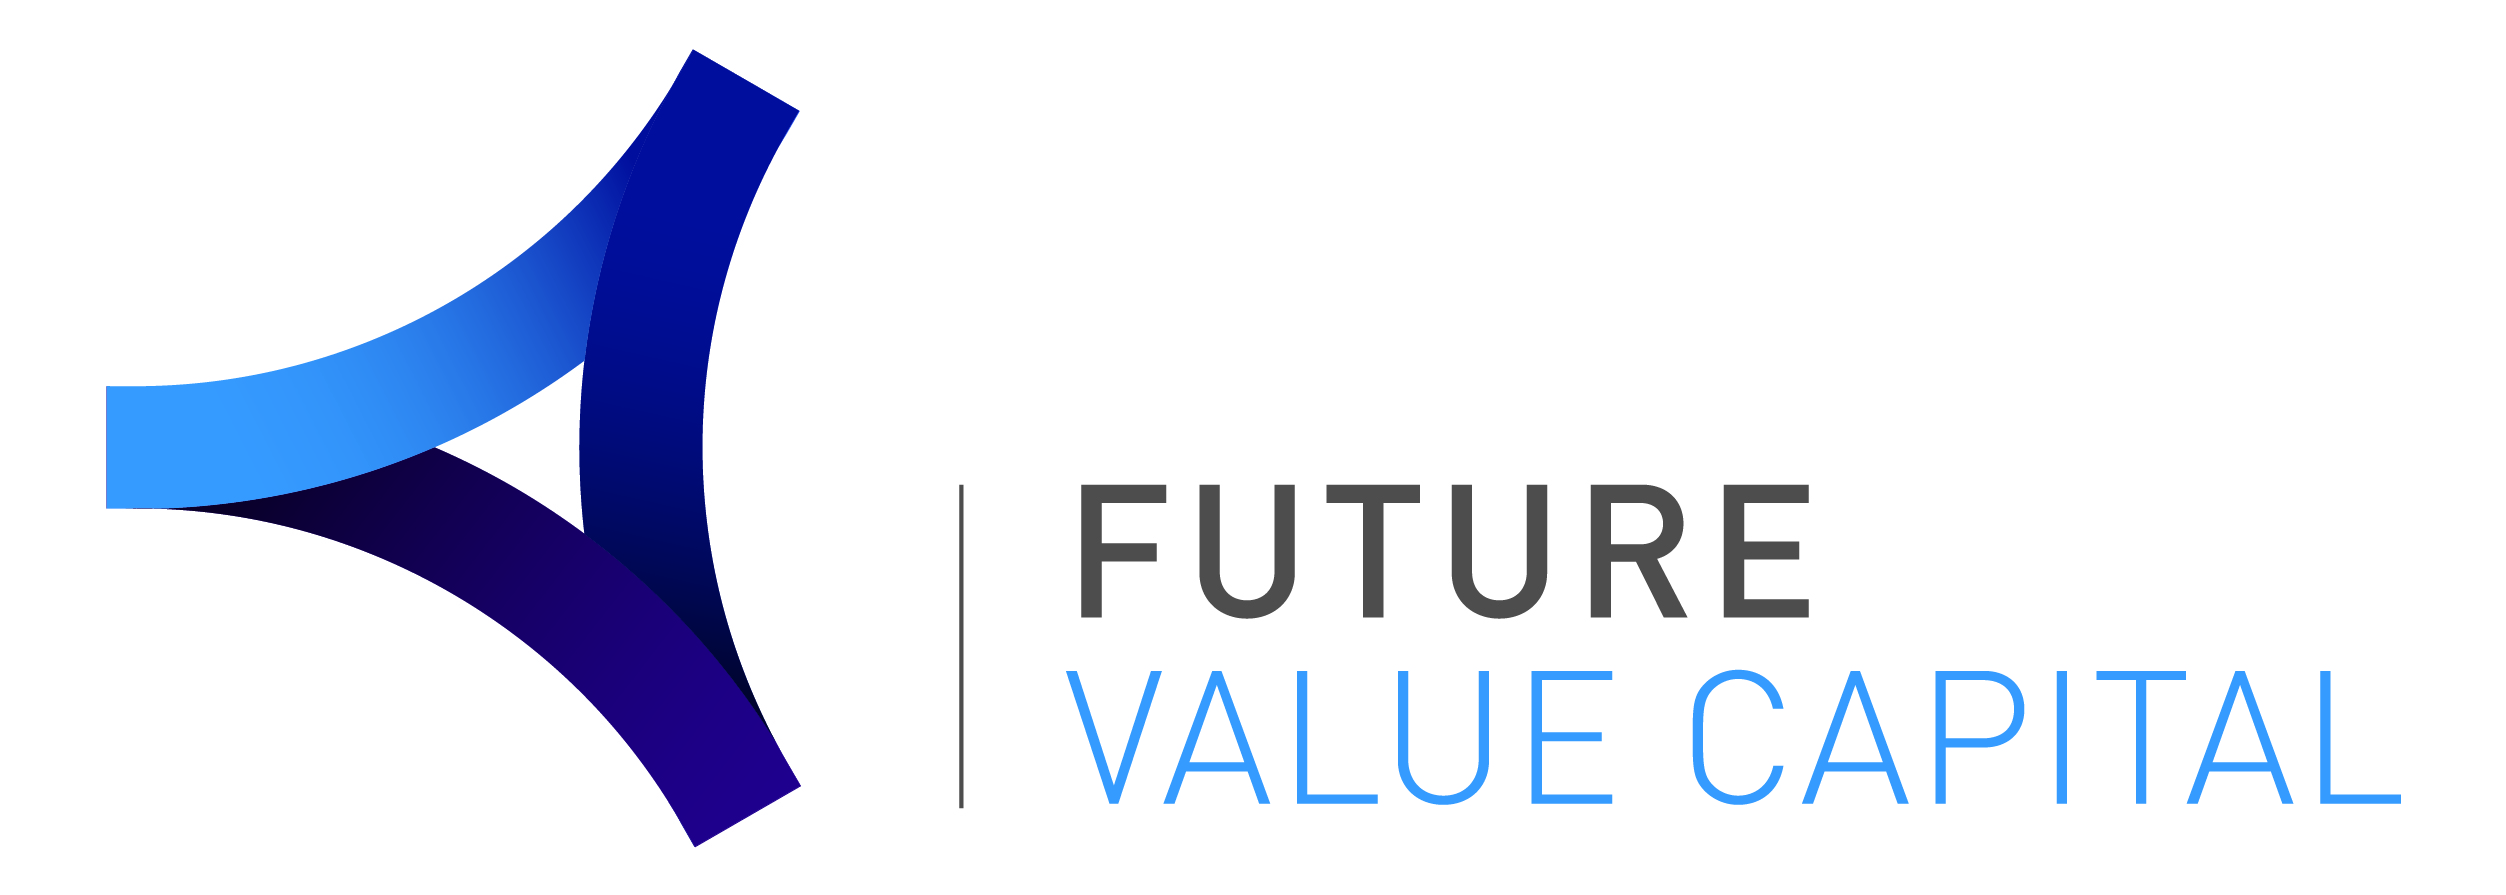 Logo Future Value Capital horizontal